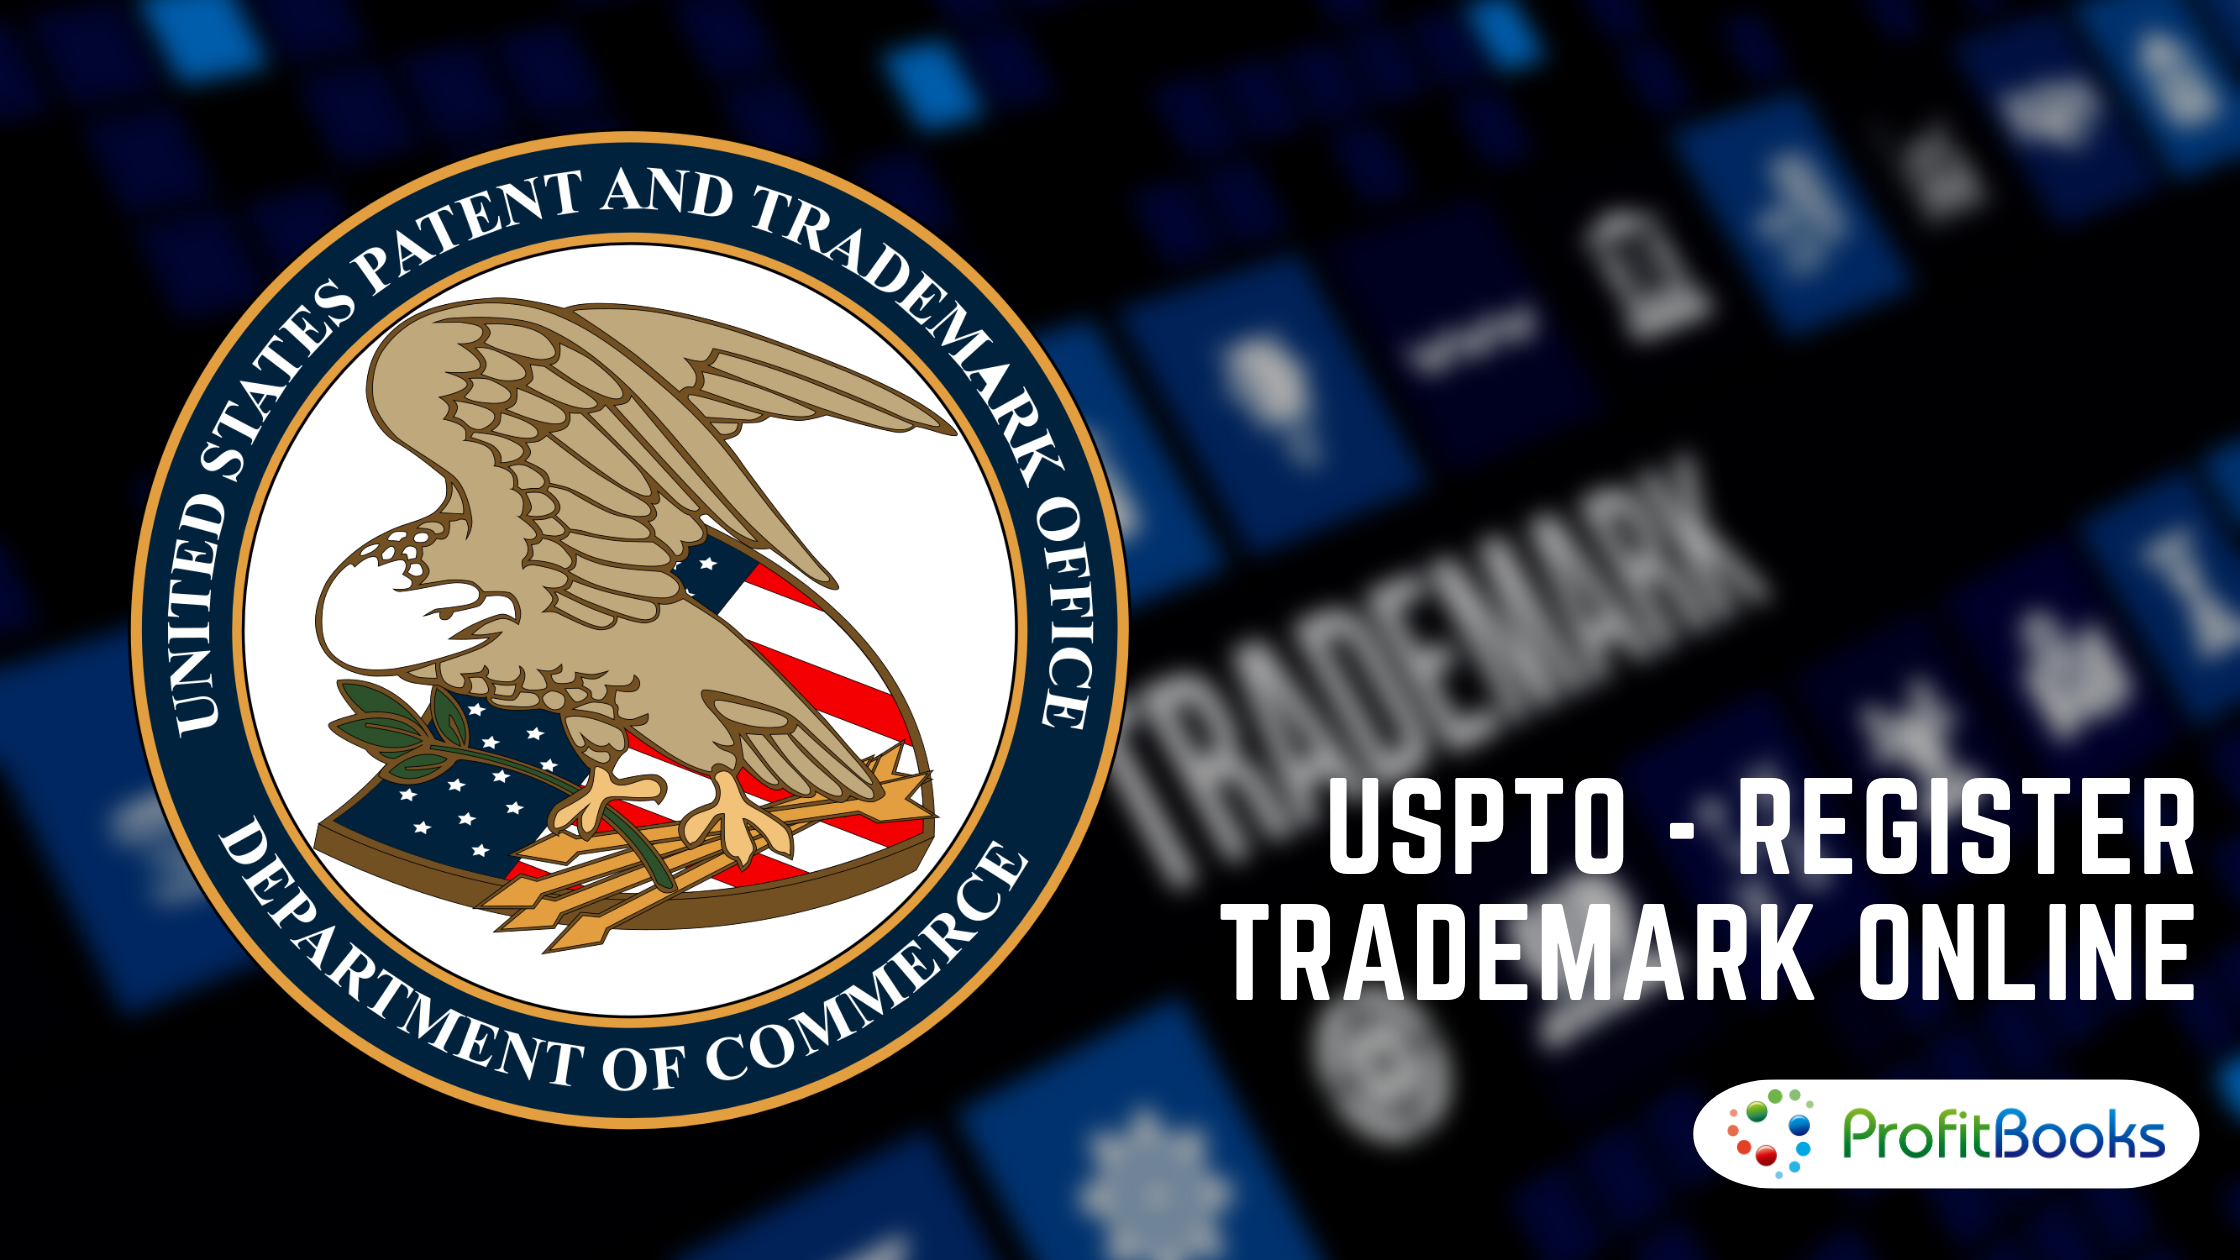 Register trademark online (USPTO logo)